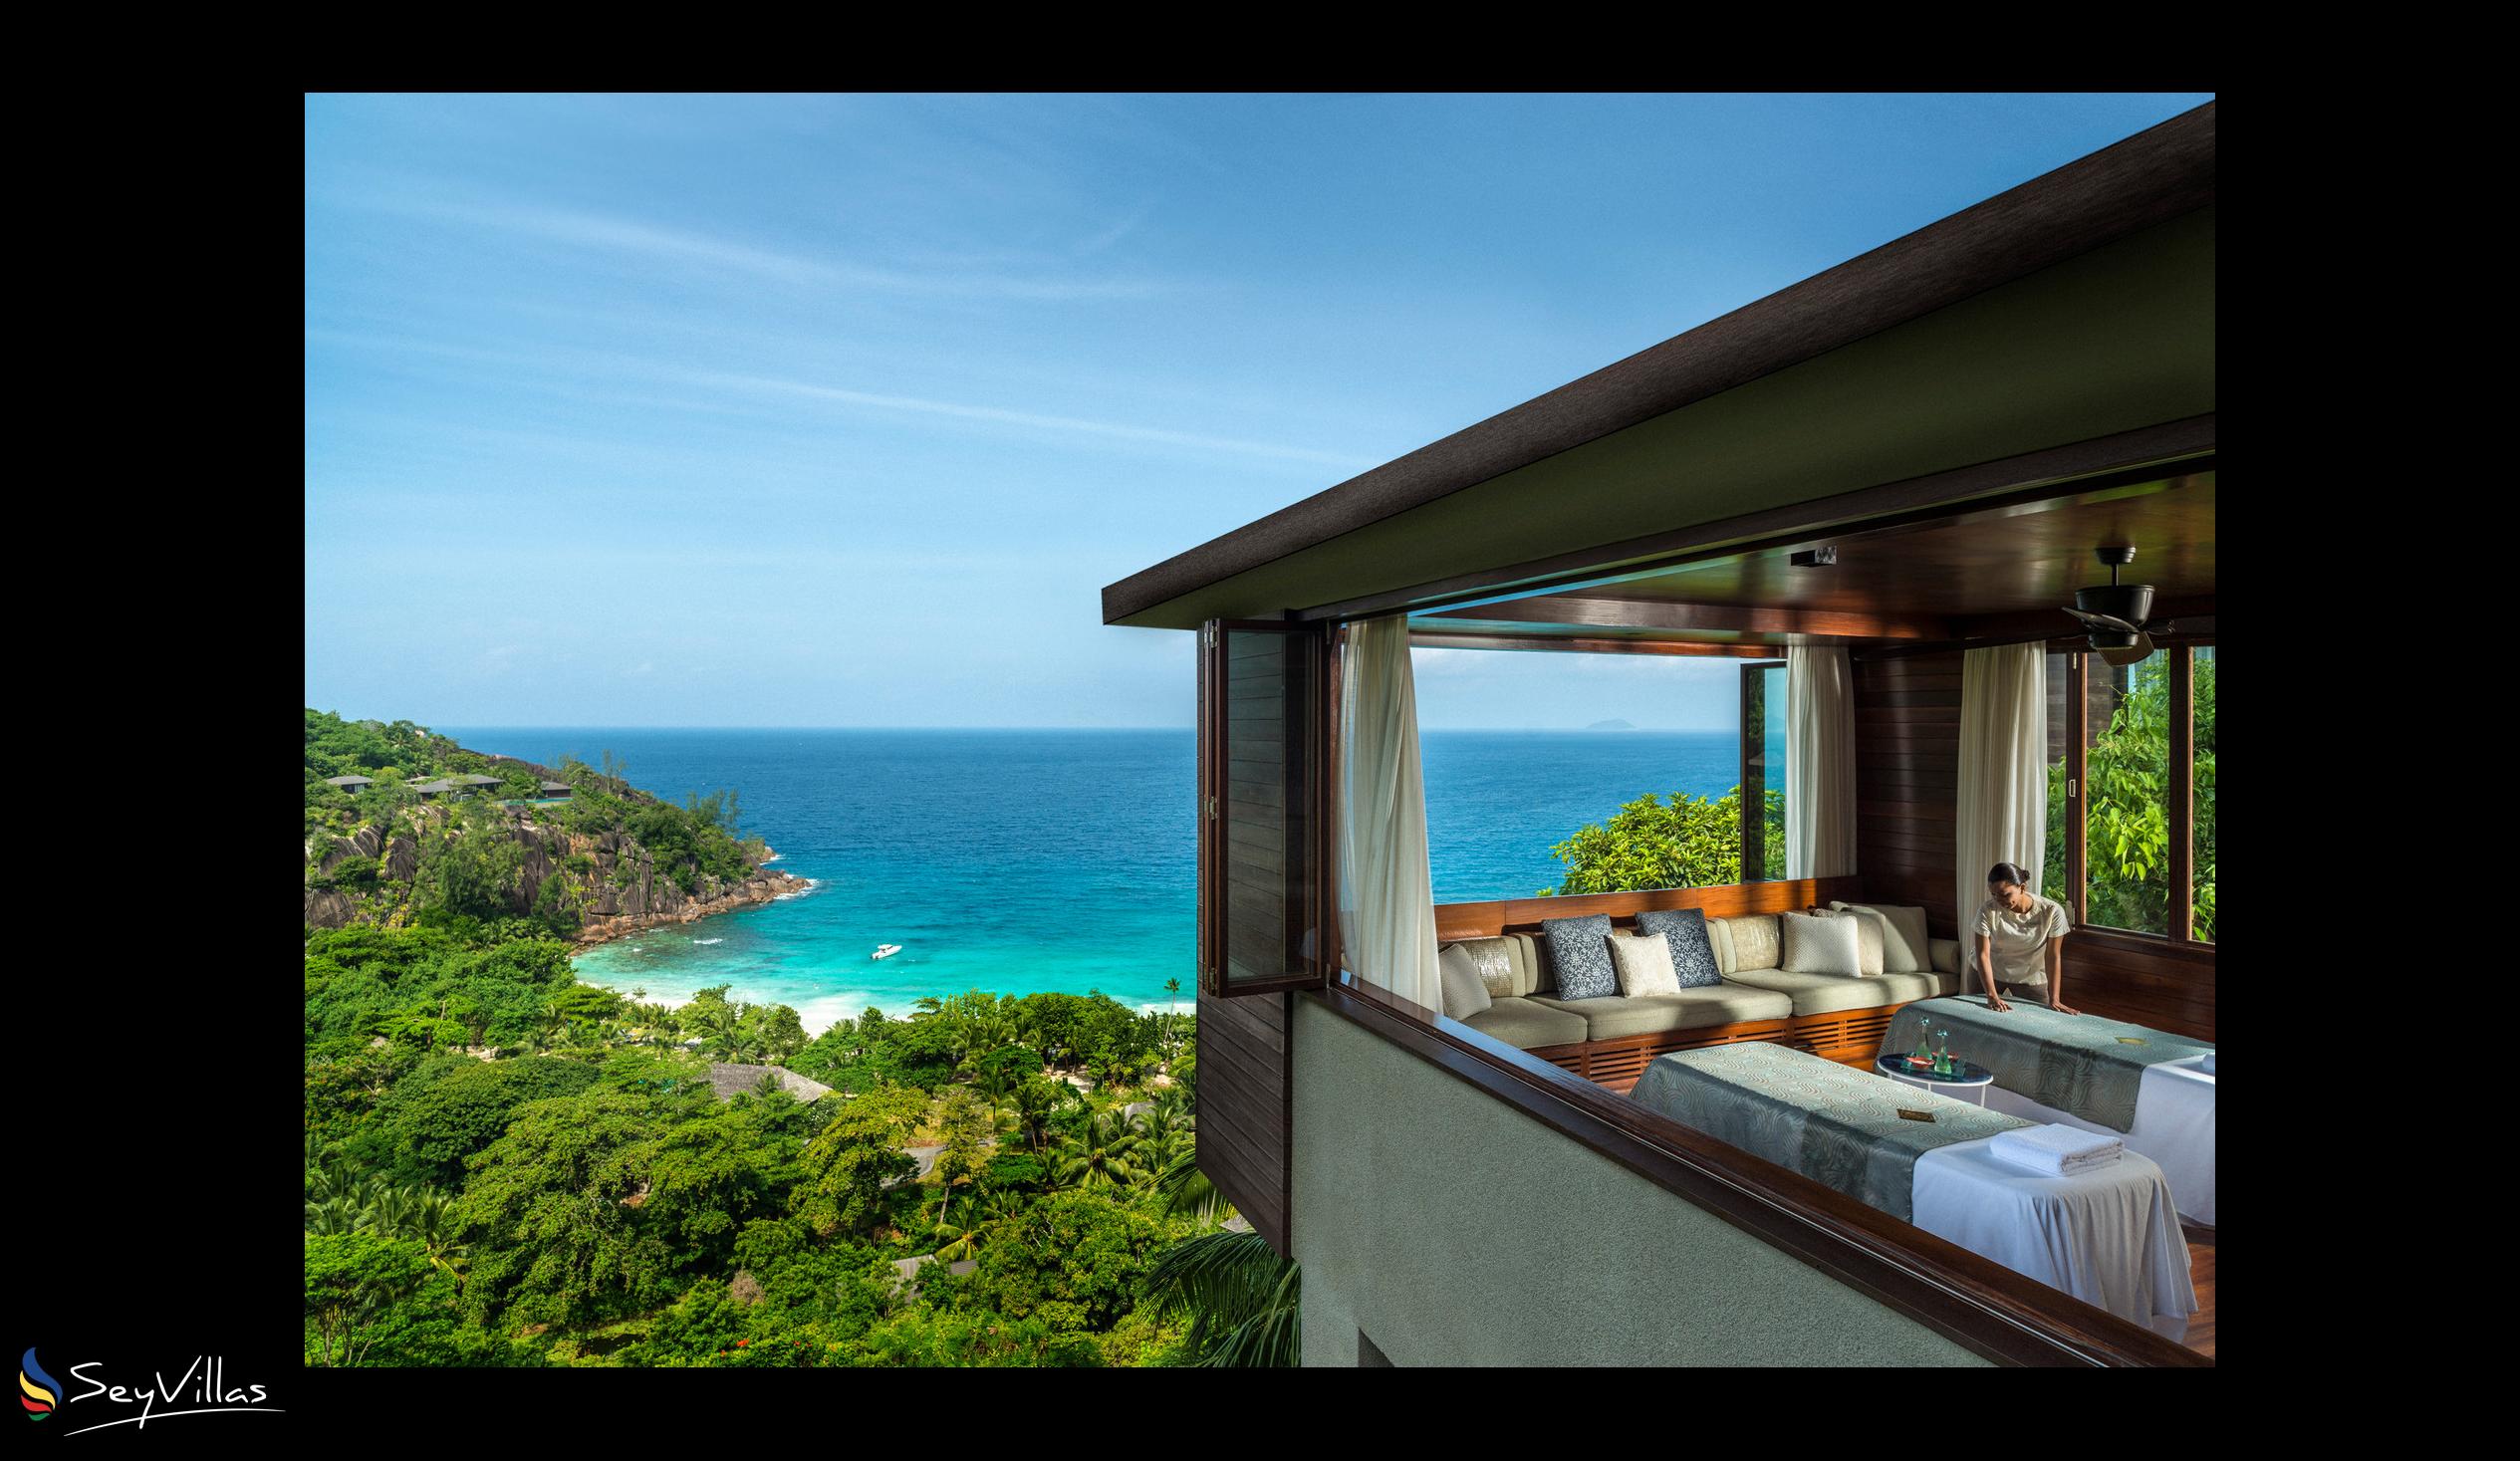 Photo 3: Four Seasons Resort - Outdoor area - Mahé (Seychelles)